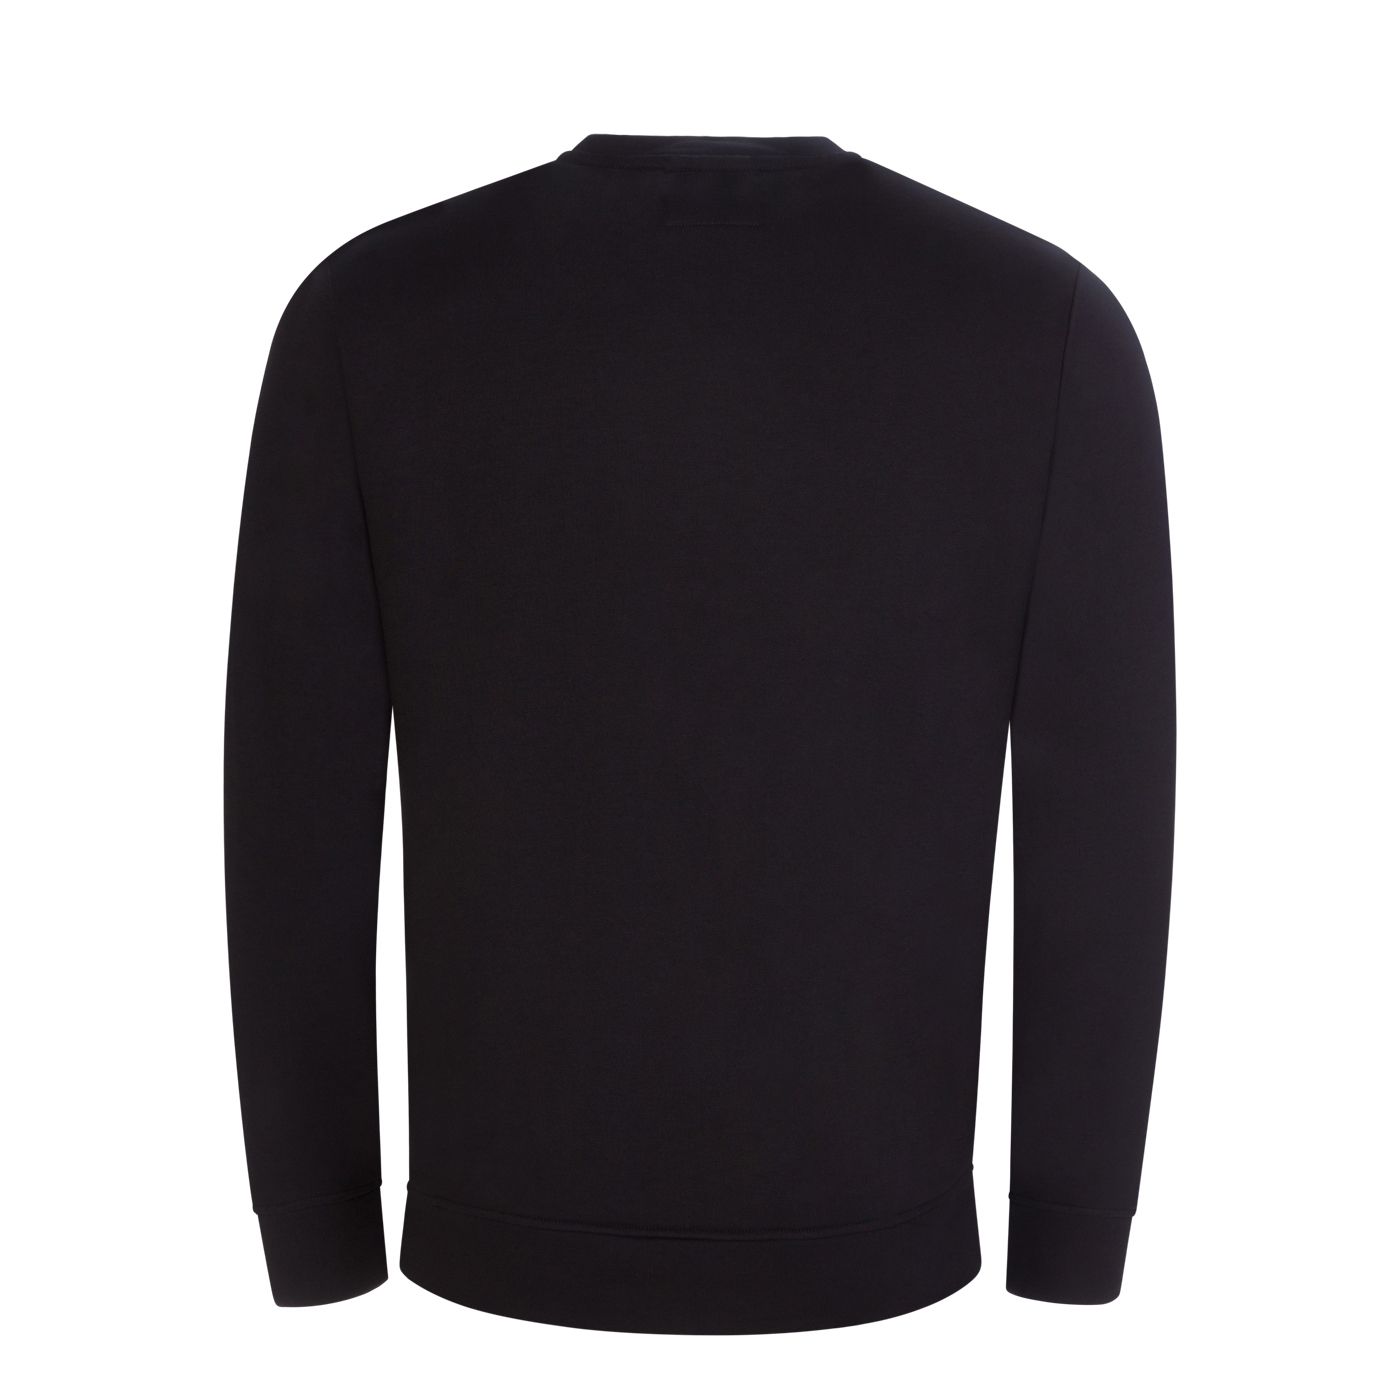 Emporio Armani 8N1MR6 Sweatshirt - F099 Black - Escape Menswear